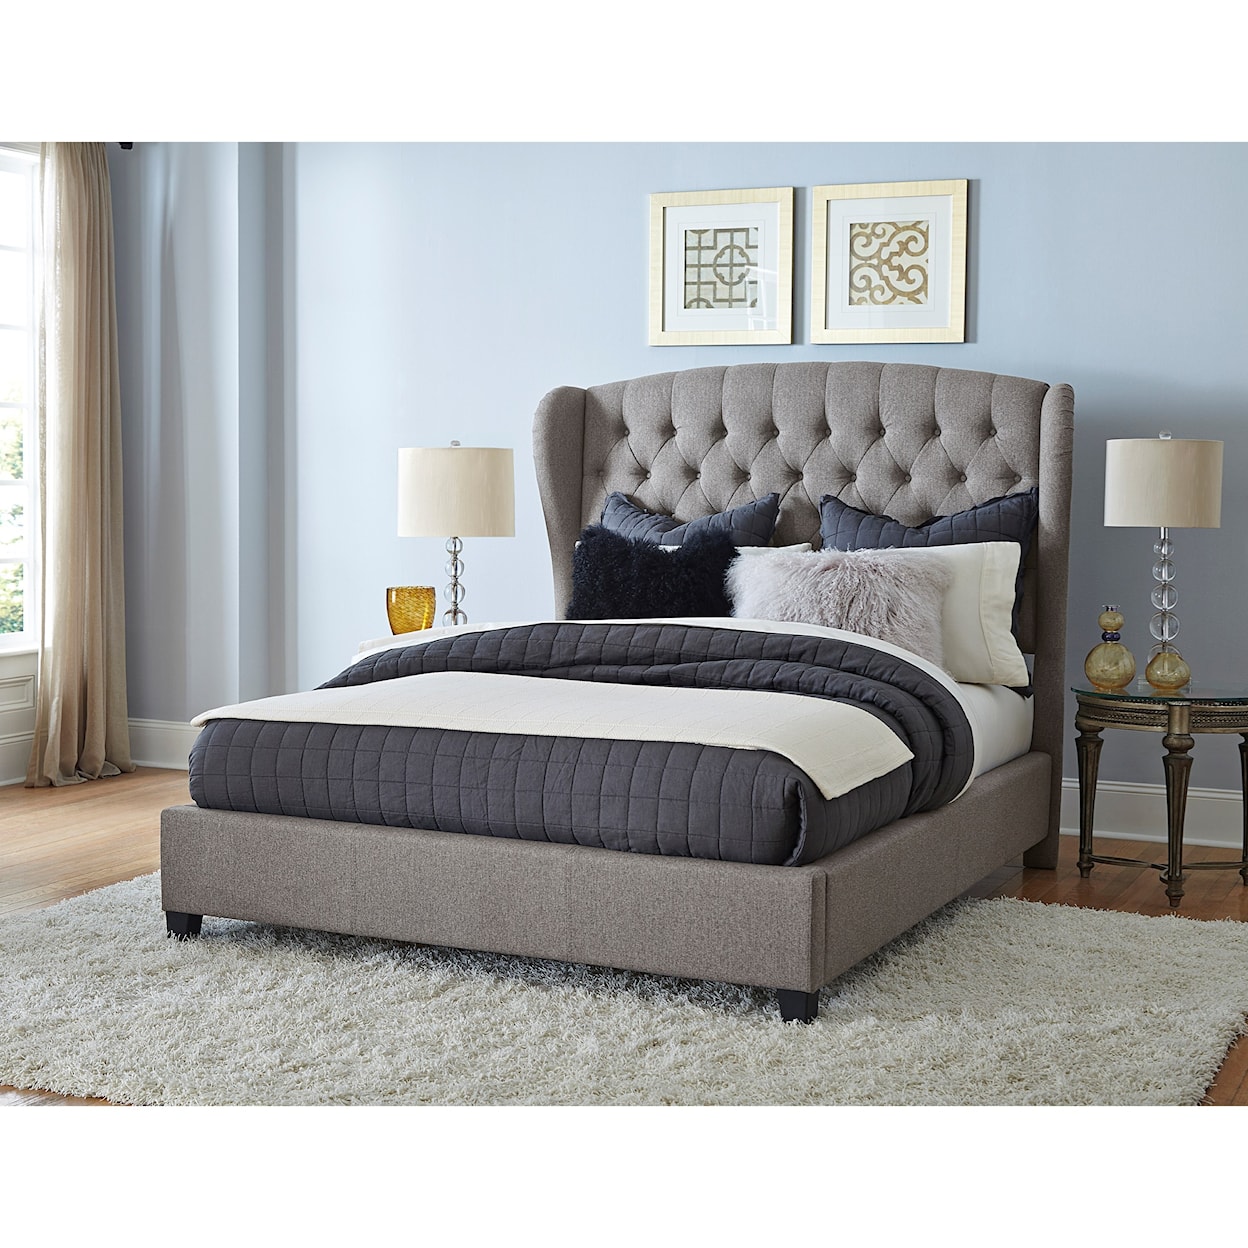 Hillsdale Upholstered Beds Queen Bed Set